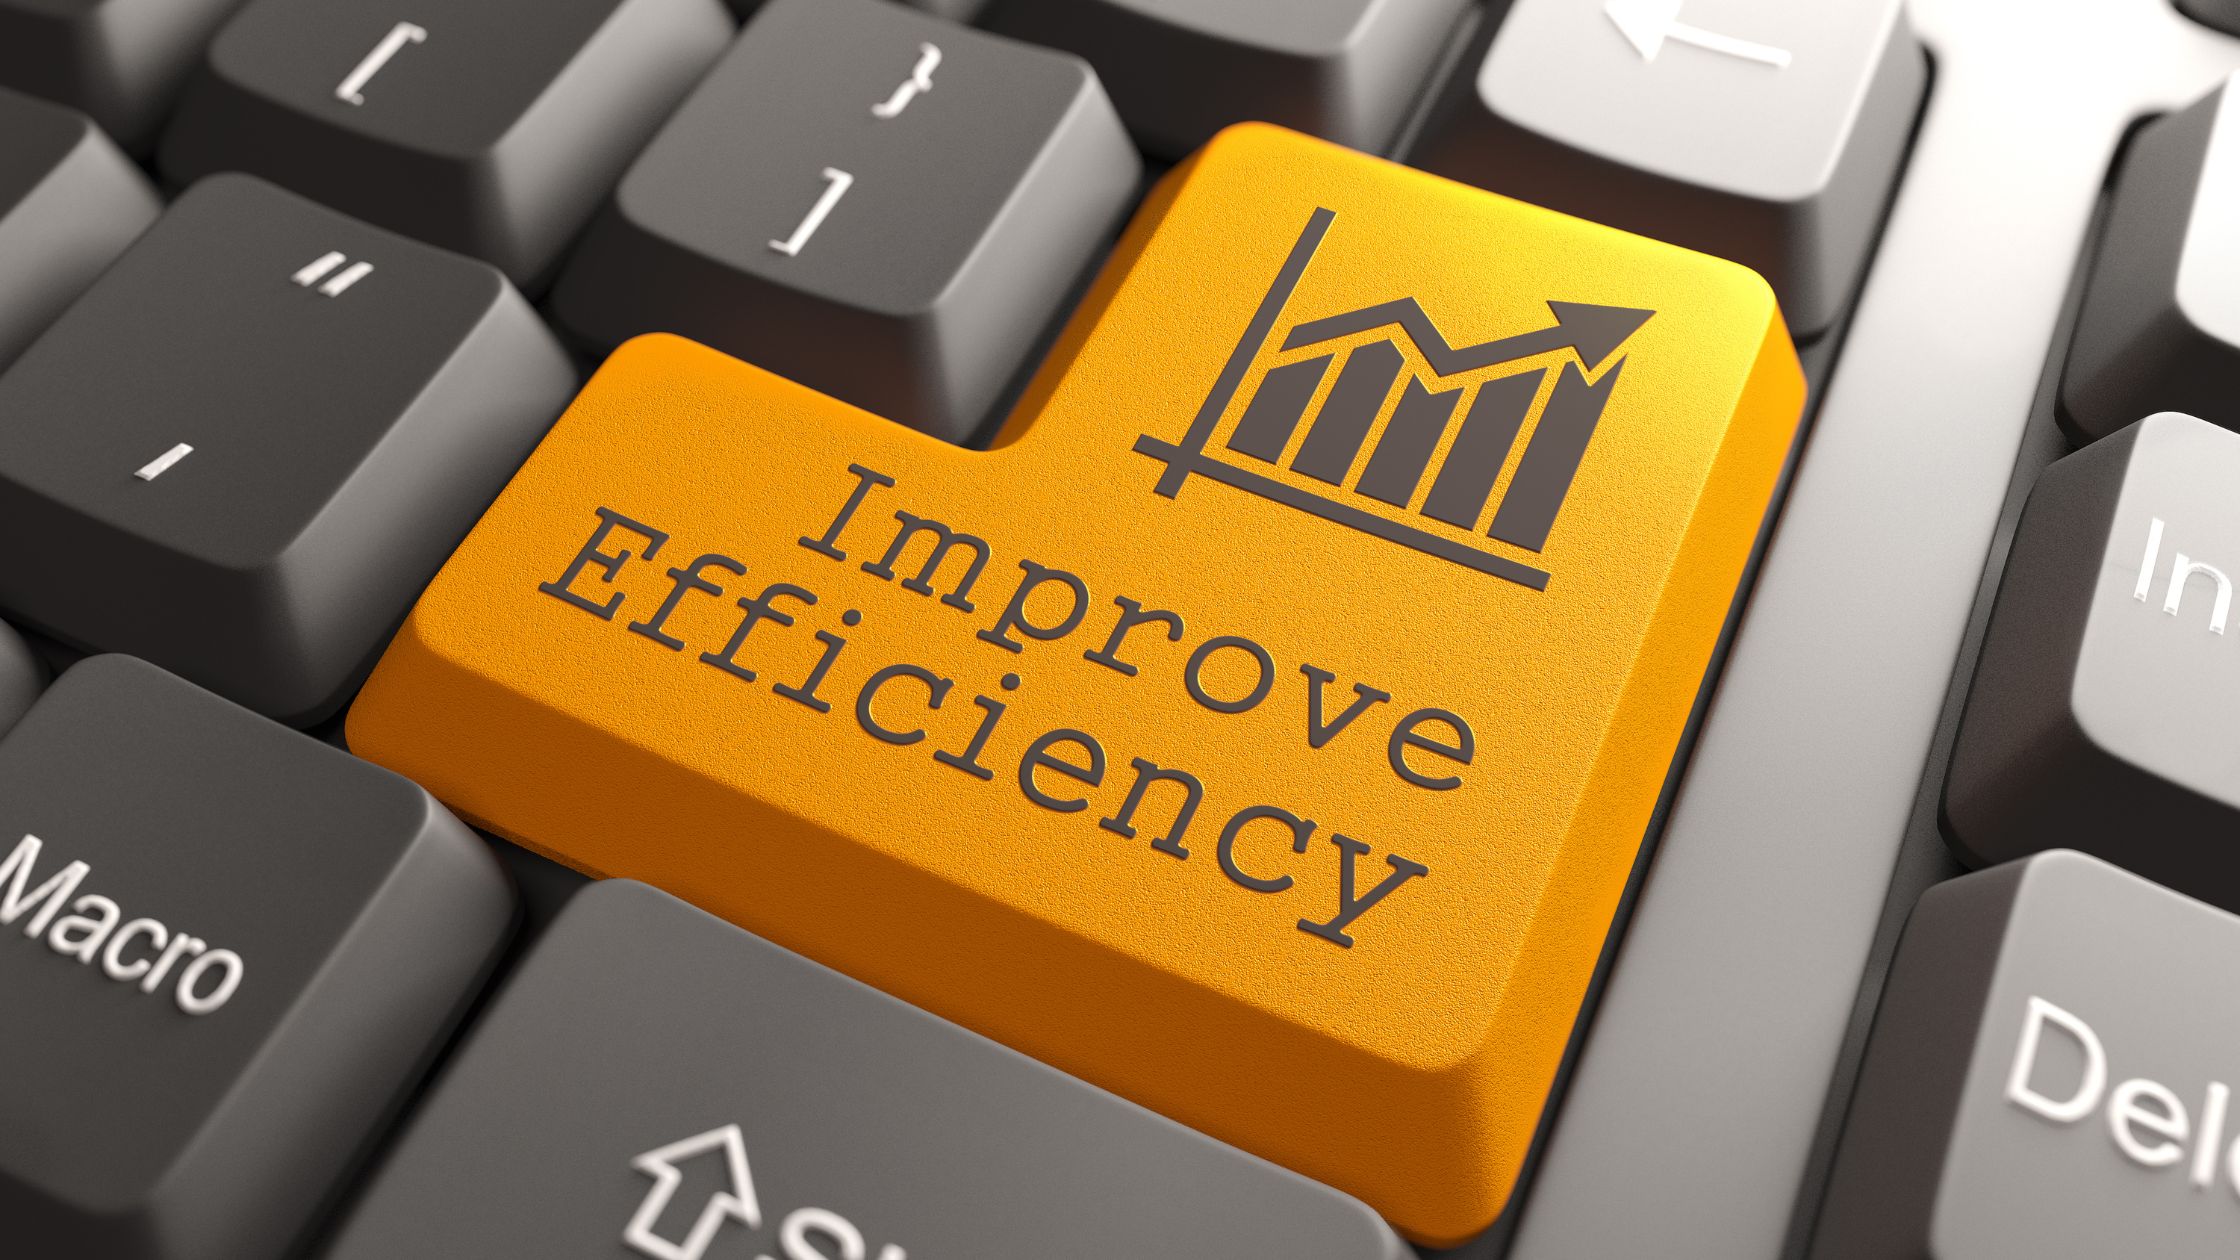 Digital transformation services help businesses increasing efficiency. 